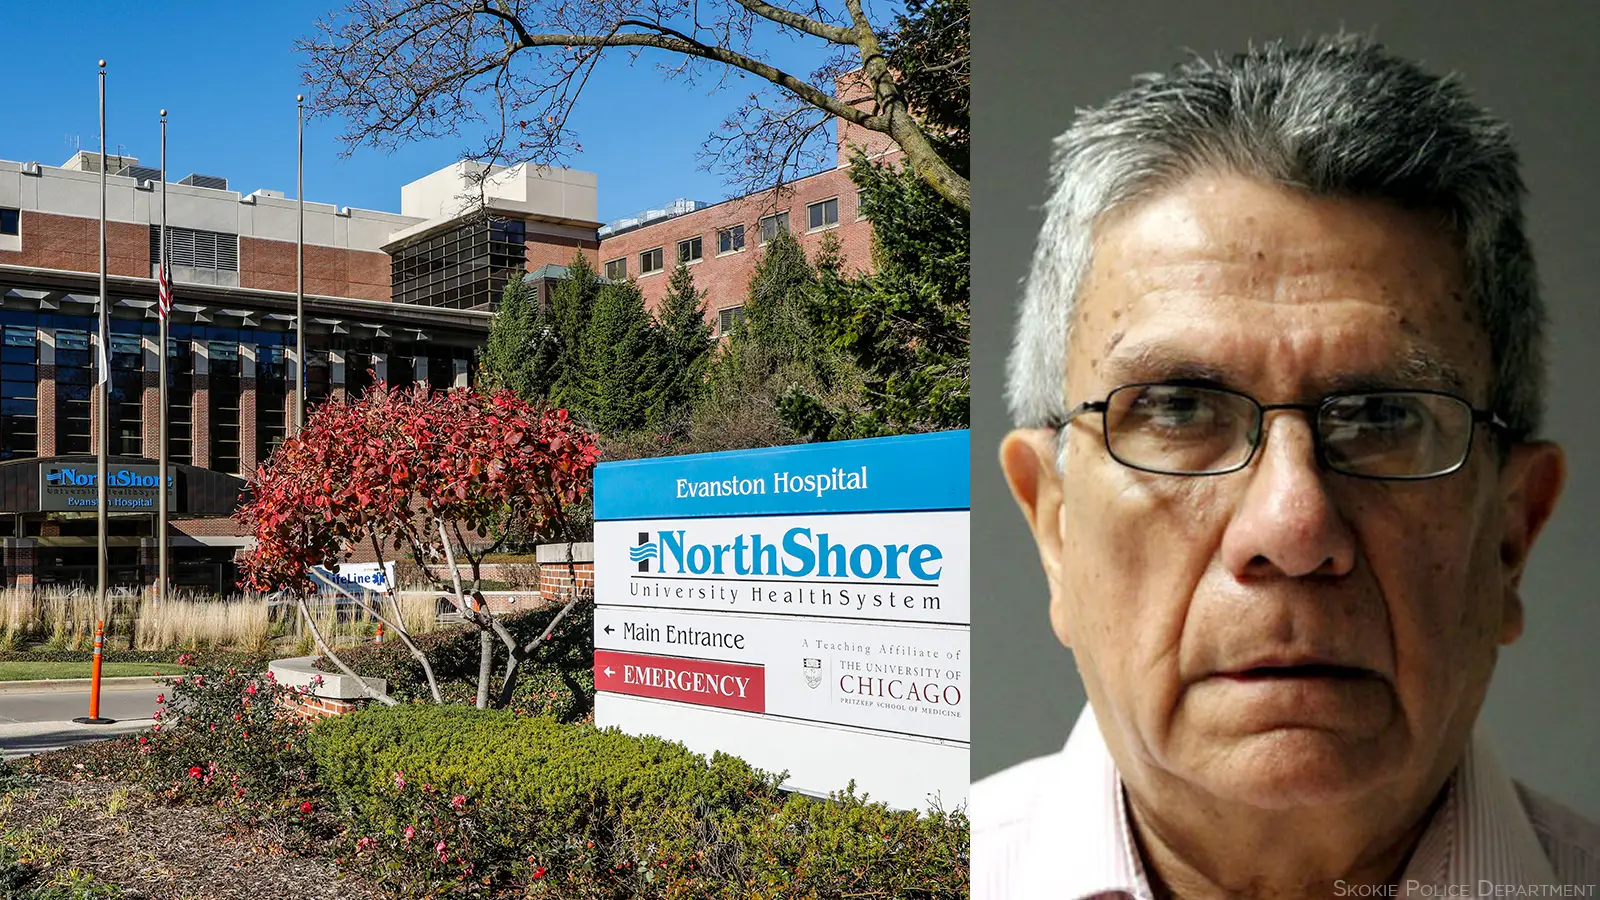 Jane Doe 28 alleges sexual assault by Gynecologist Fabio Ortega, NorthShore University HealthSystem